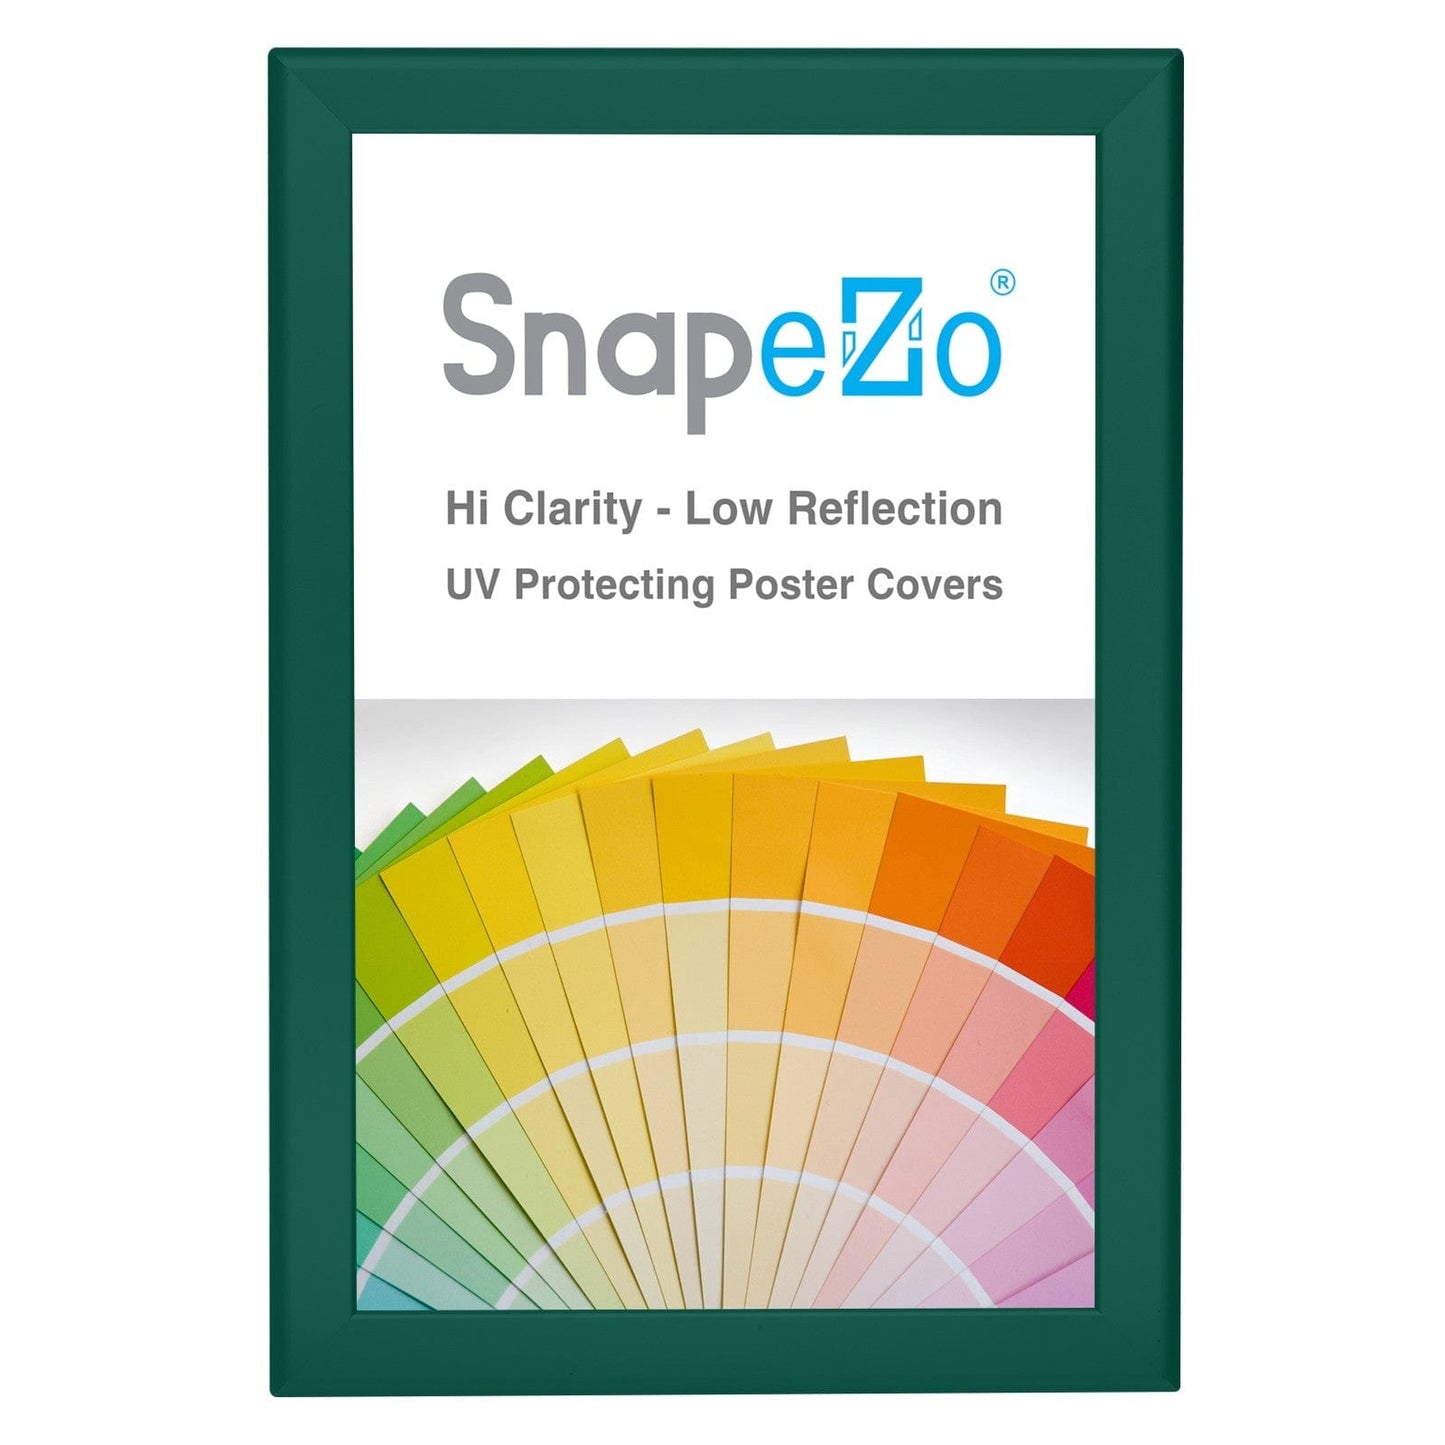 11x17 Green SnapeZo® Snap Frame - 1.25" Profile - Snap Frames Direct